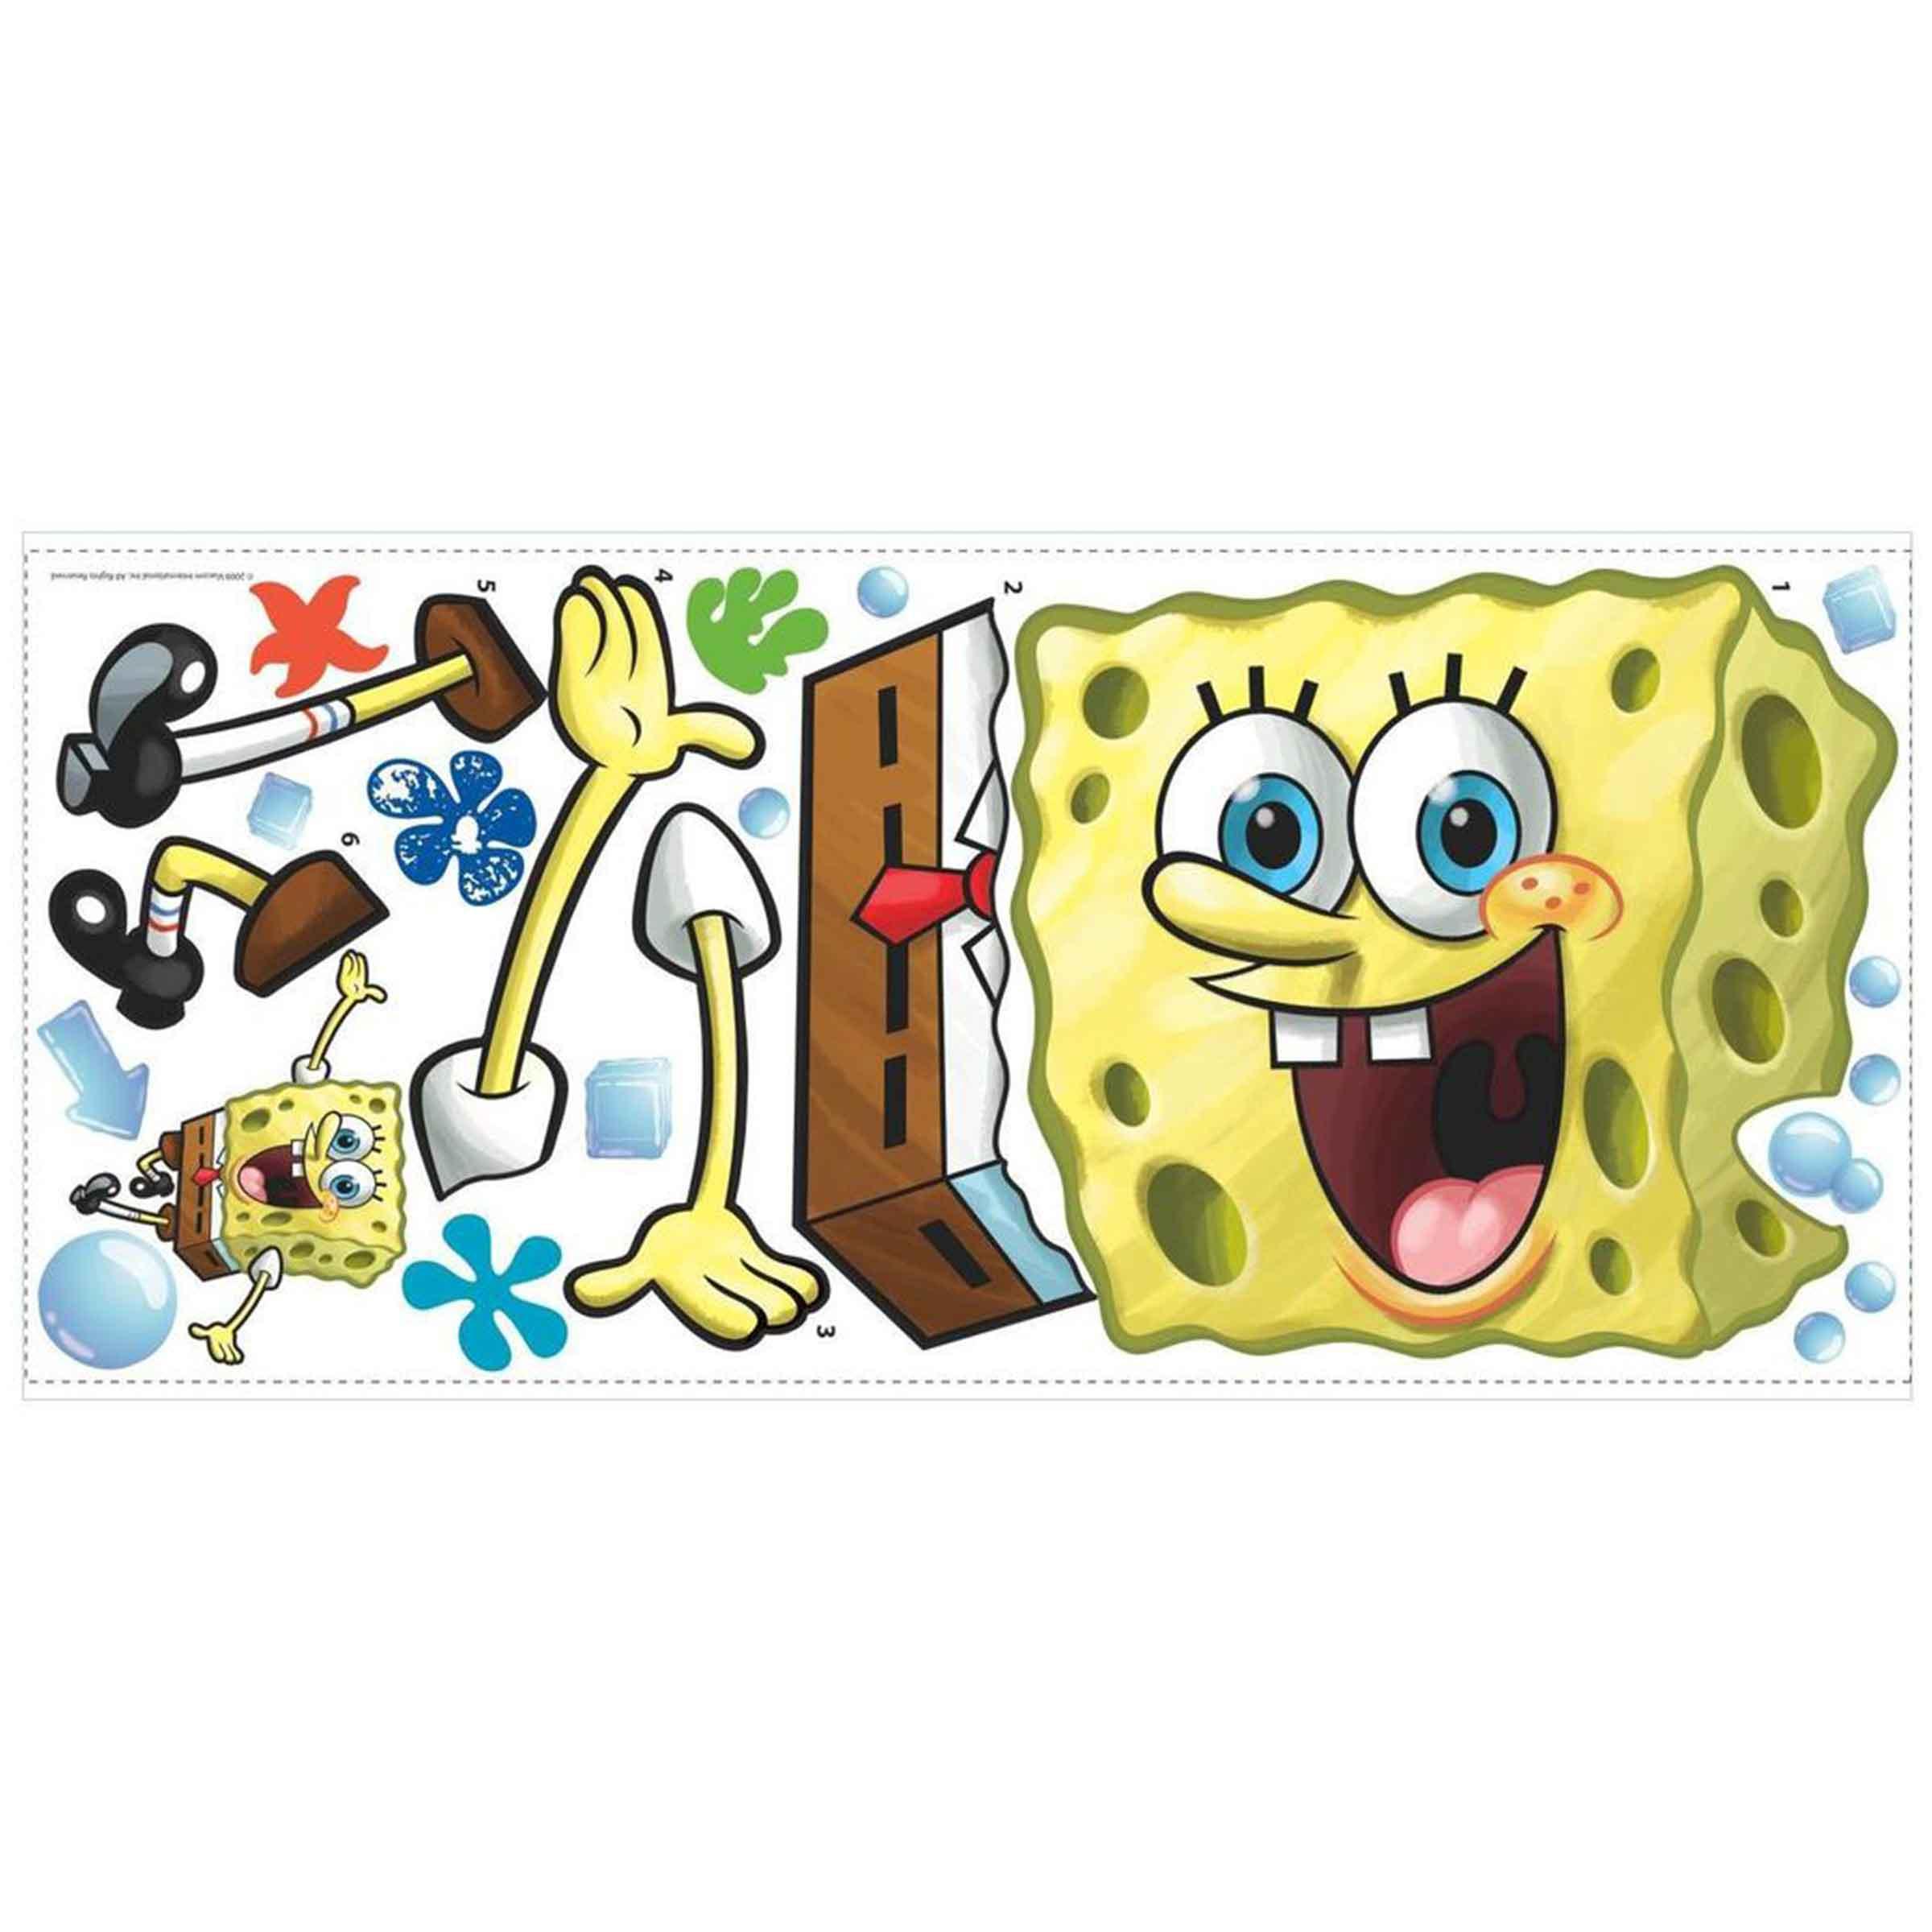 Spongebob Squarepants Giant Wall Decal Sticker Applique